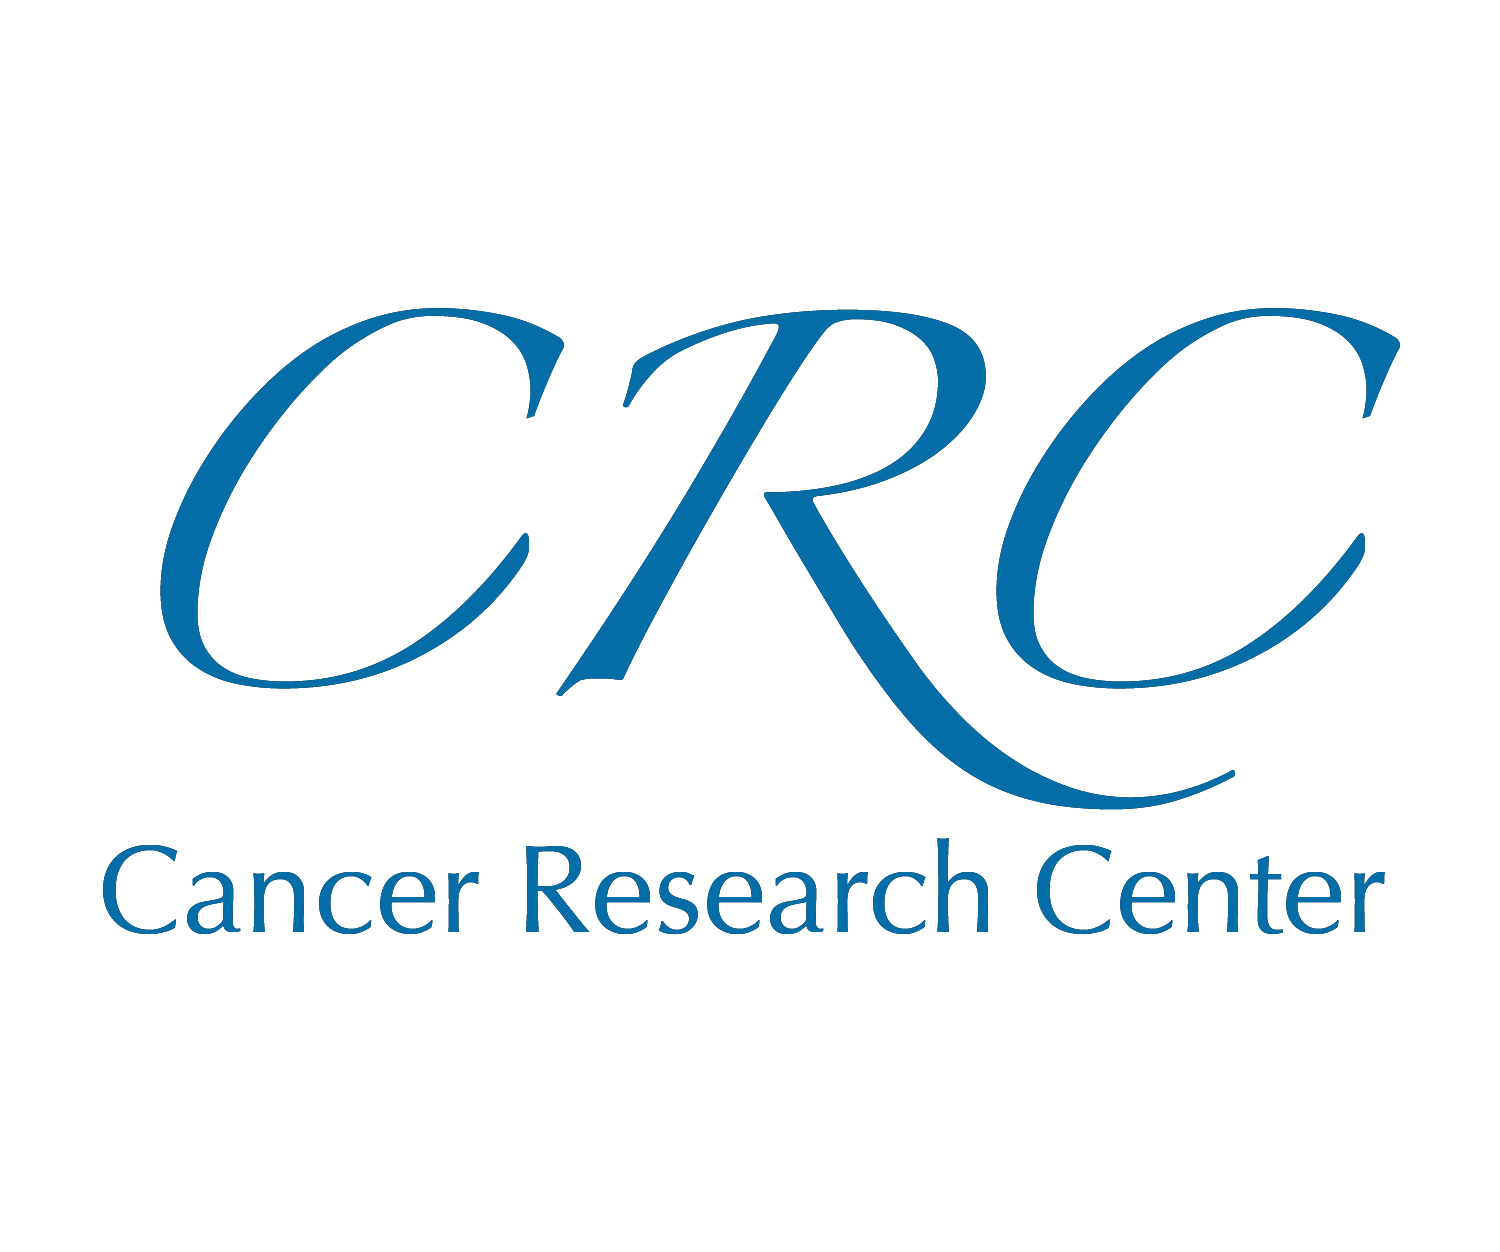 Cancer Research Center logo